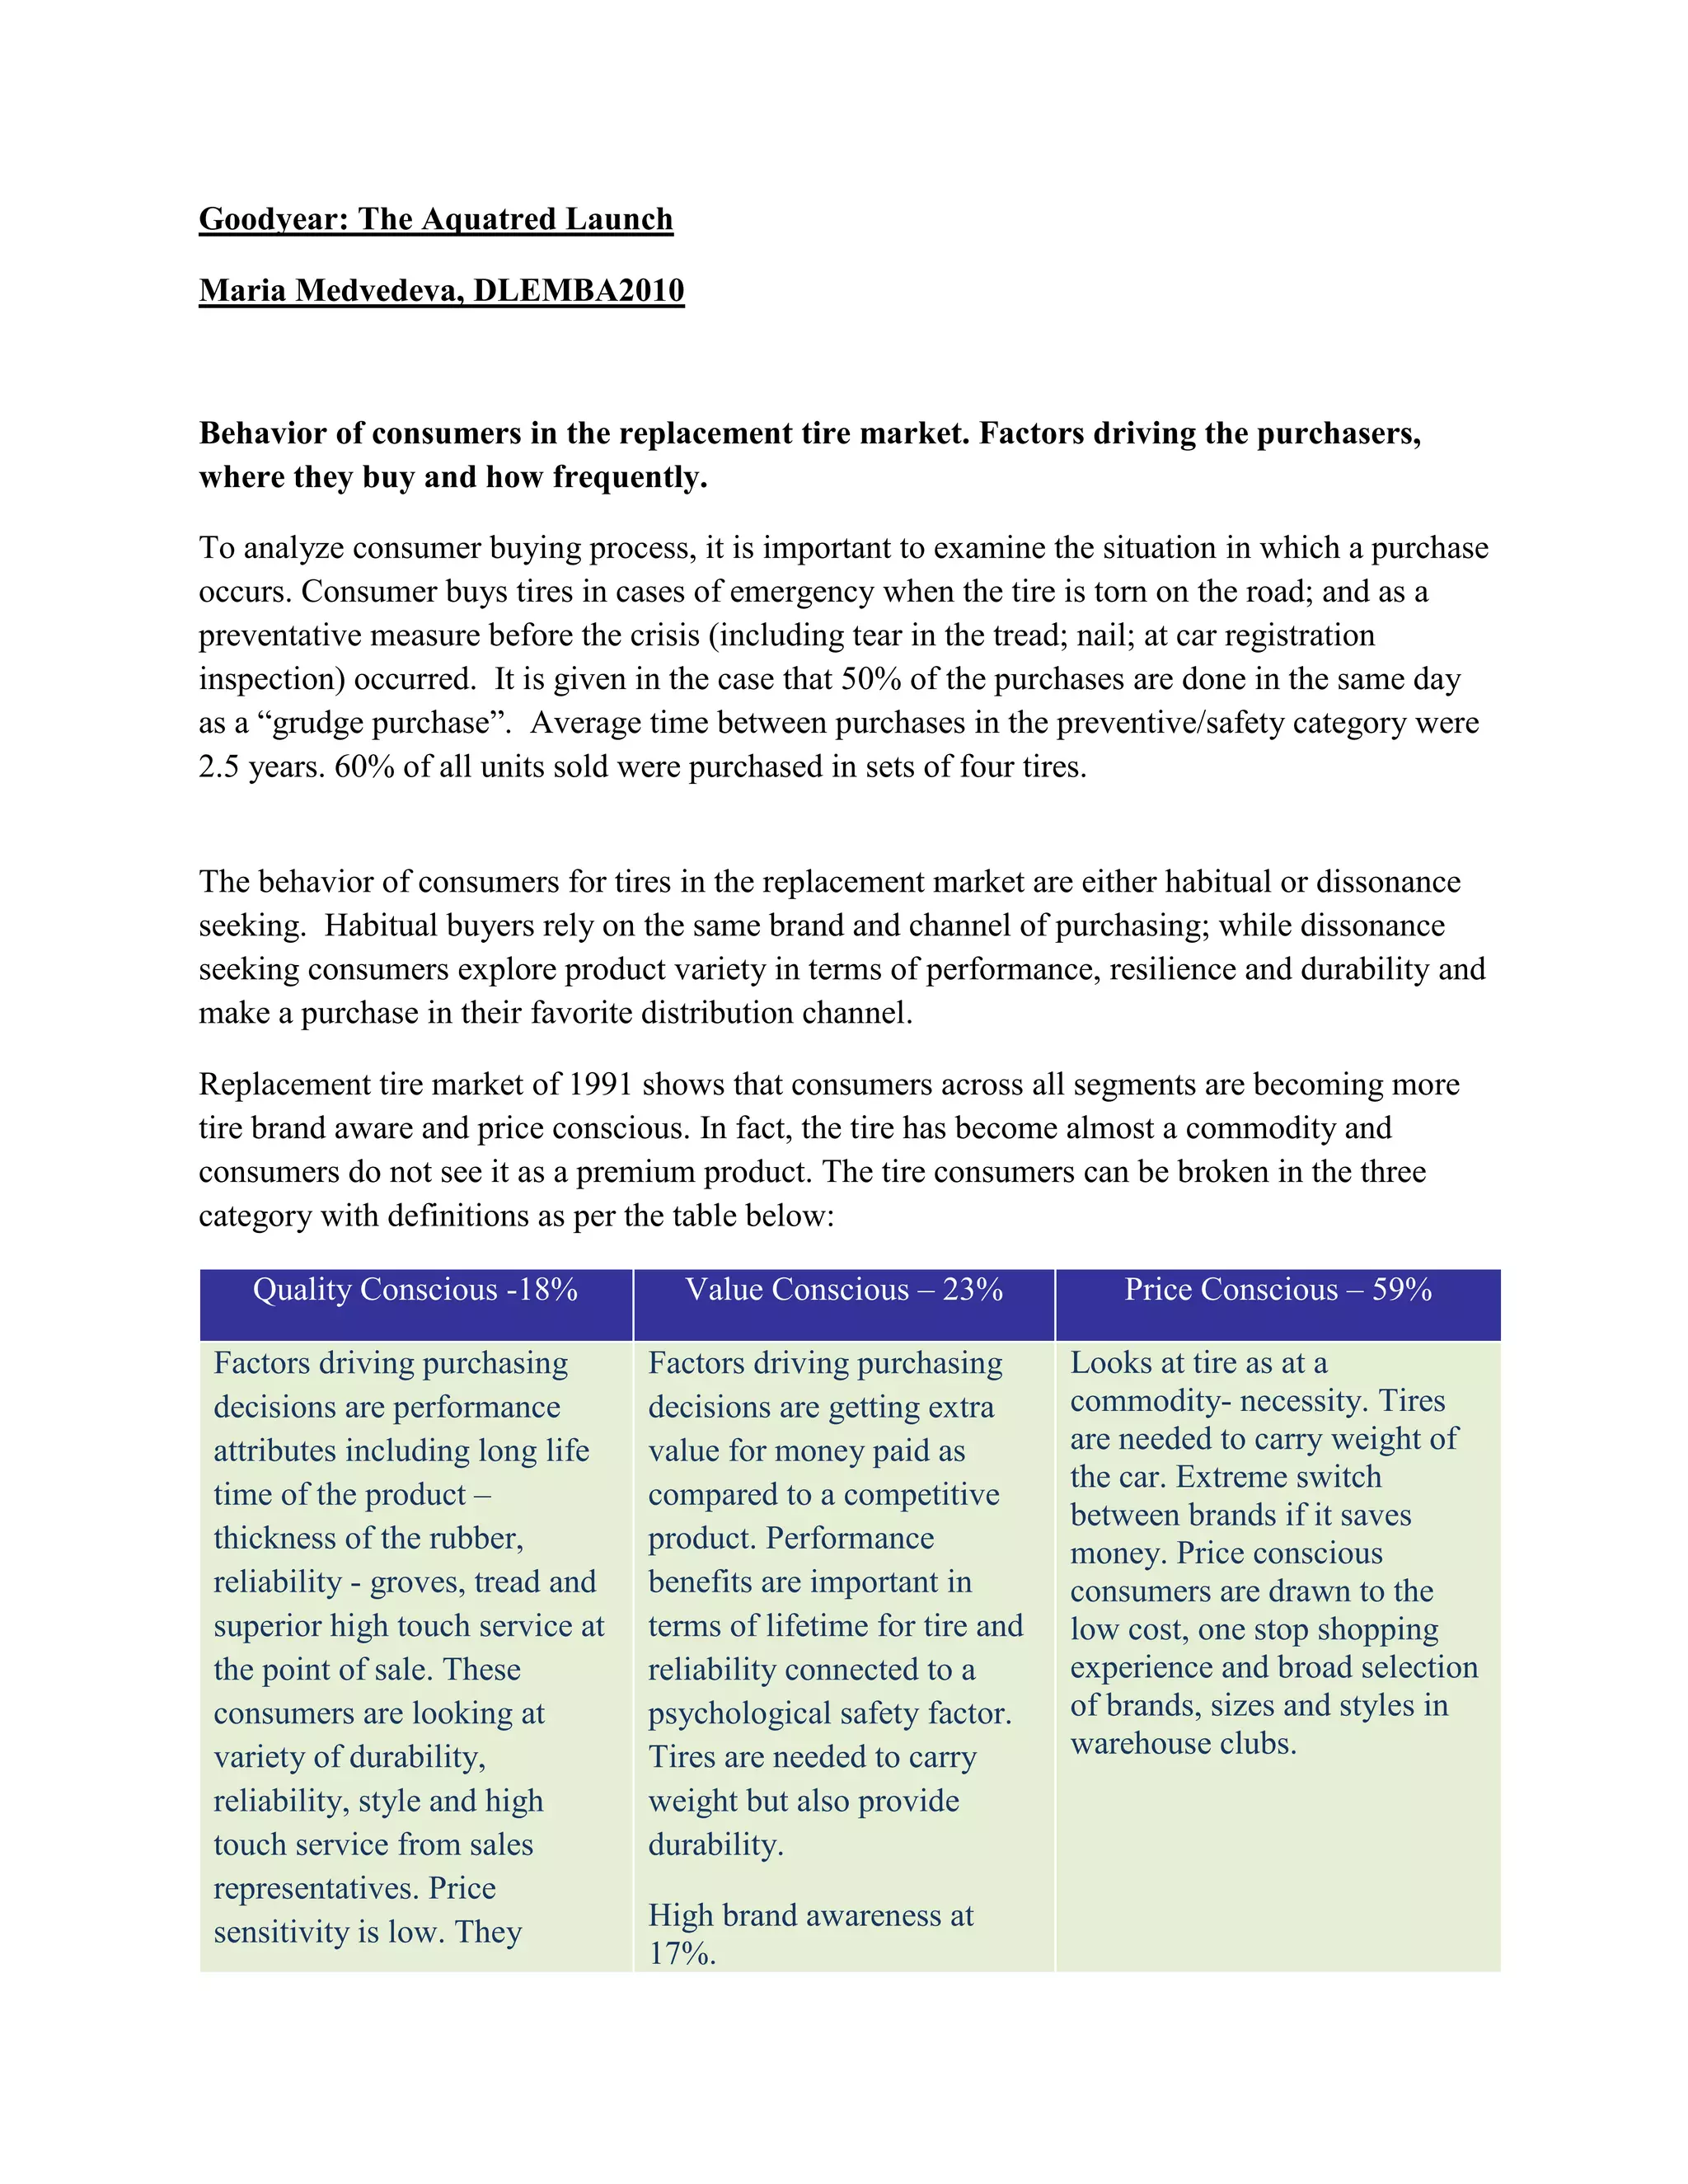 goodyear aquatred case study pdf